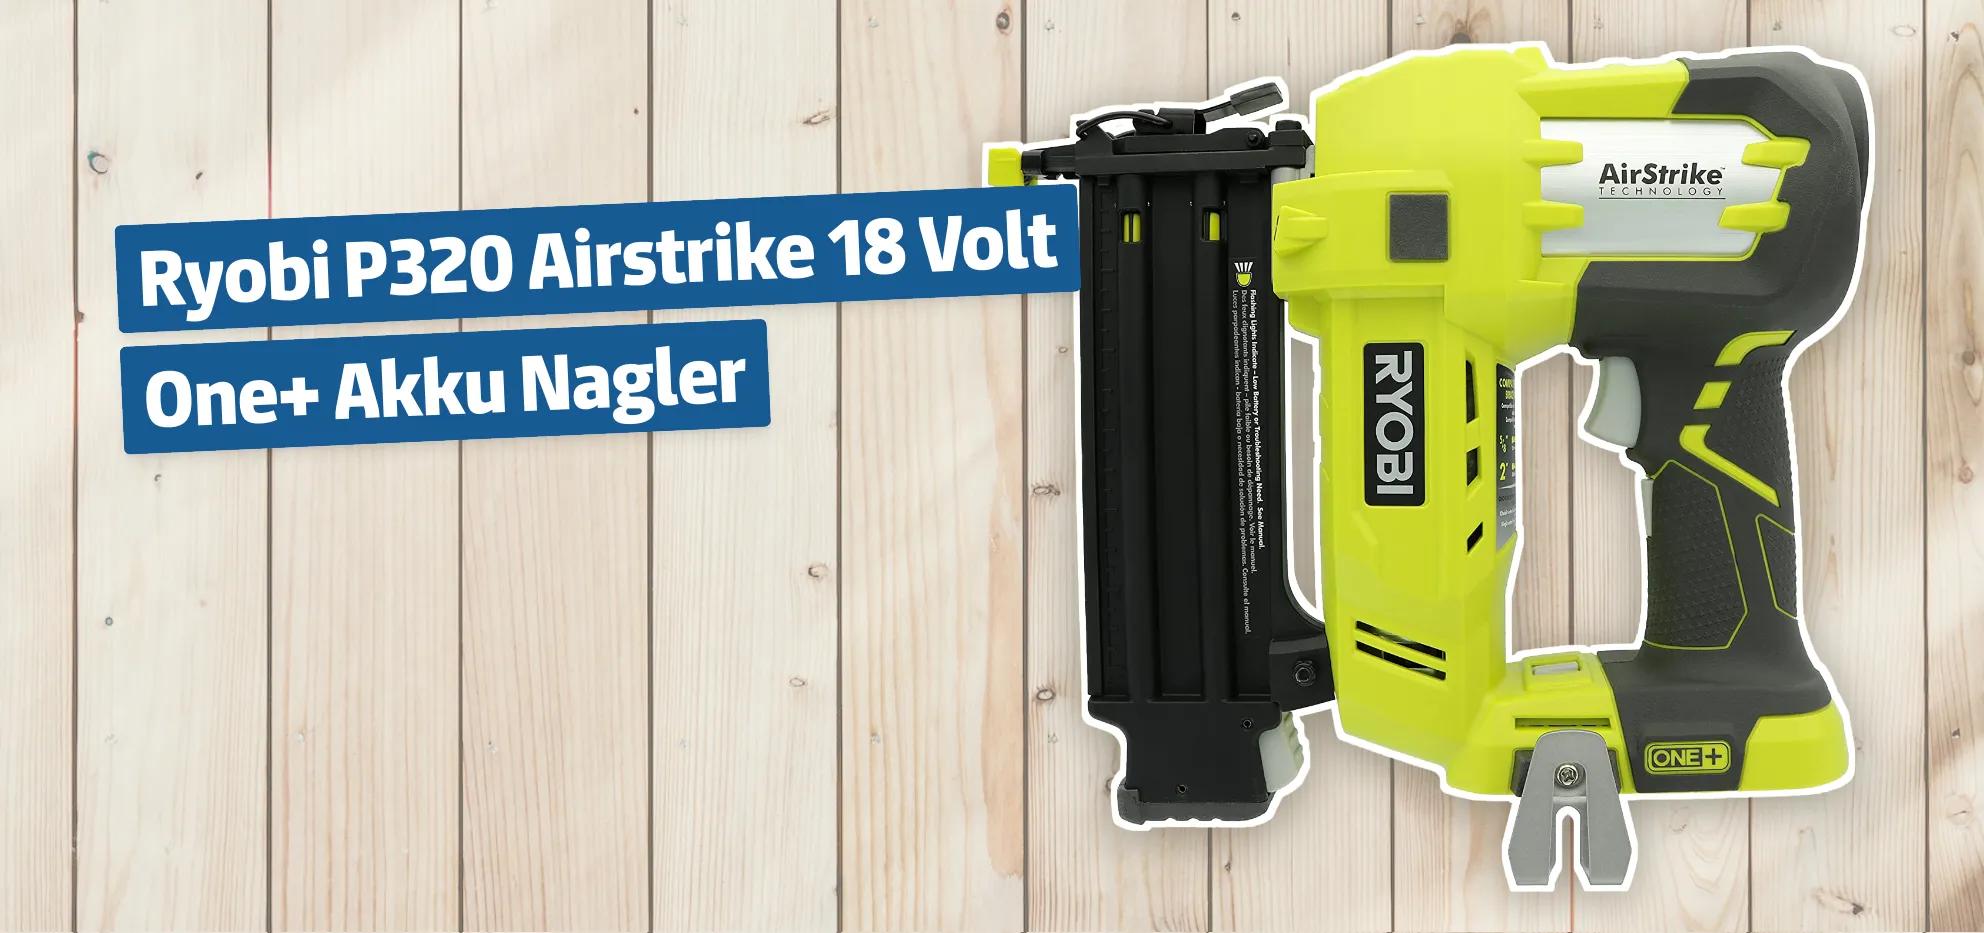 Ryobi P320 Airstrike 18 Volt One+ Akku Nagler